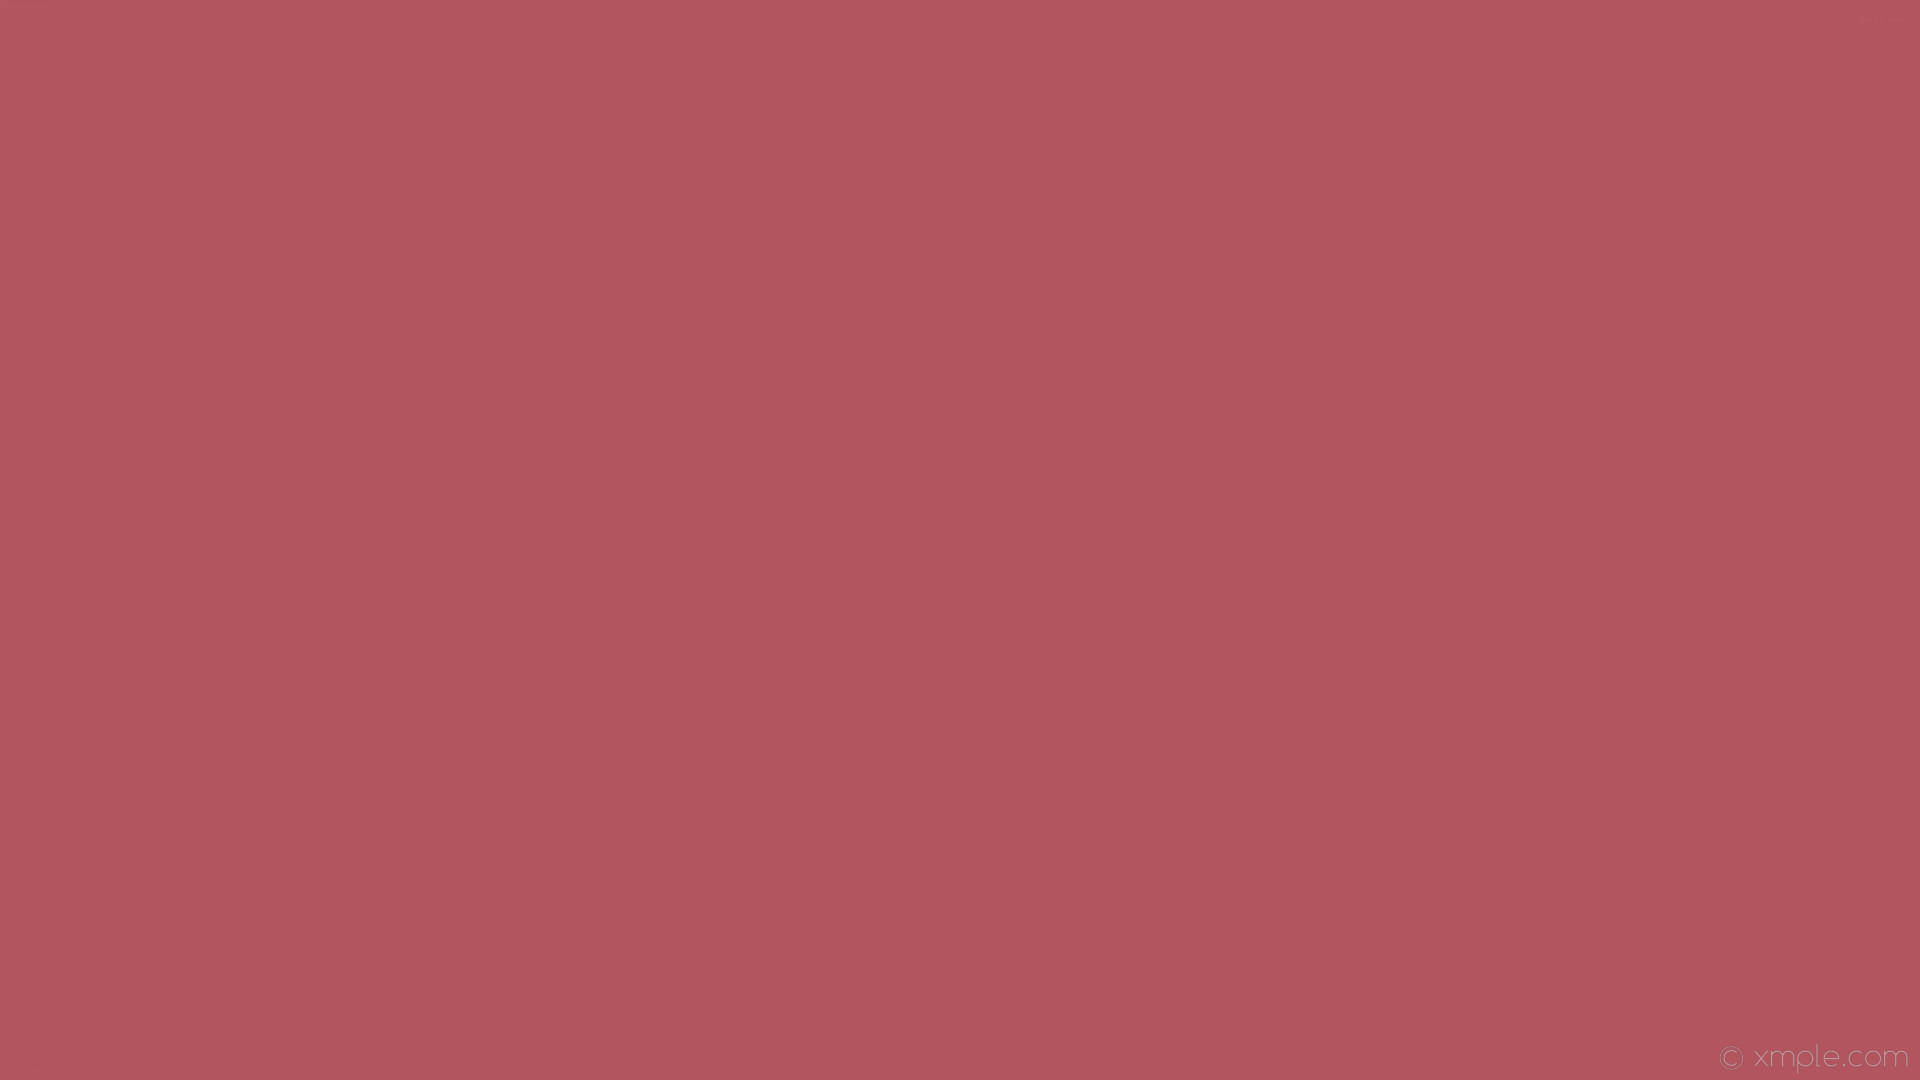 1920x1080 wallpaper one colour plain solid color red single #b2555e